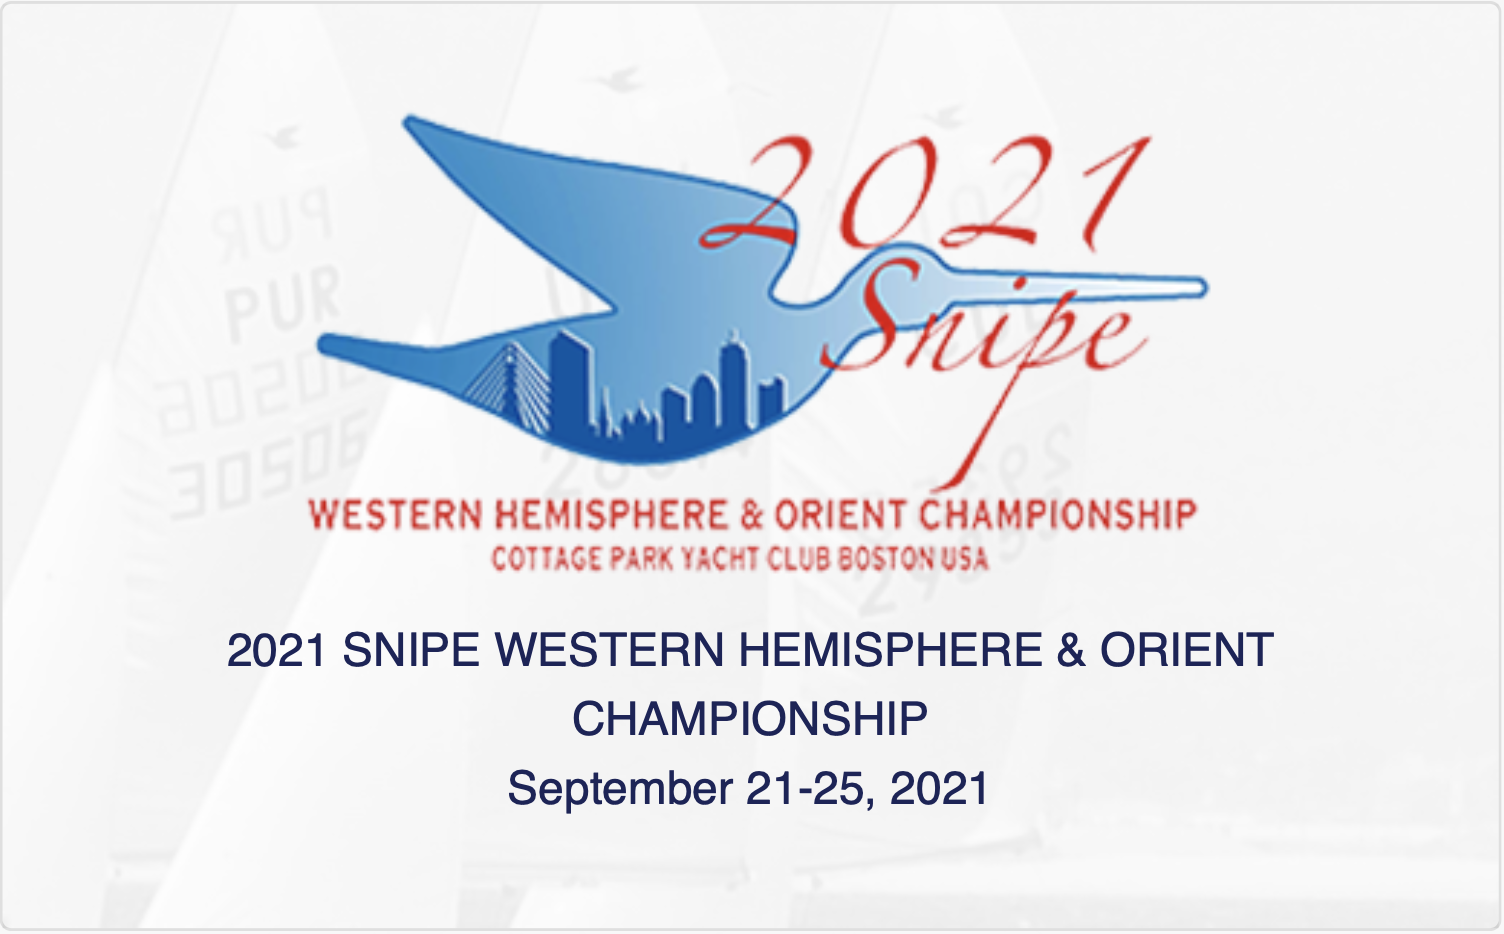 2021 Snipe Western Hemisphere & Orient Championship Image